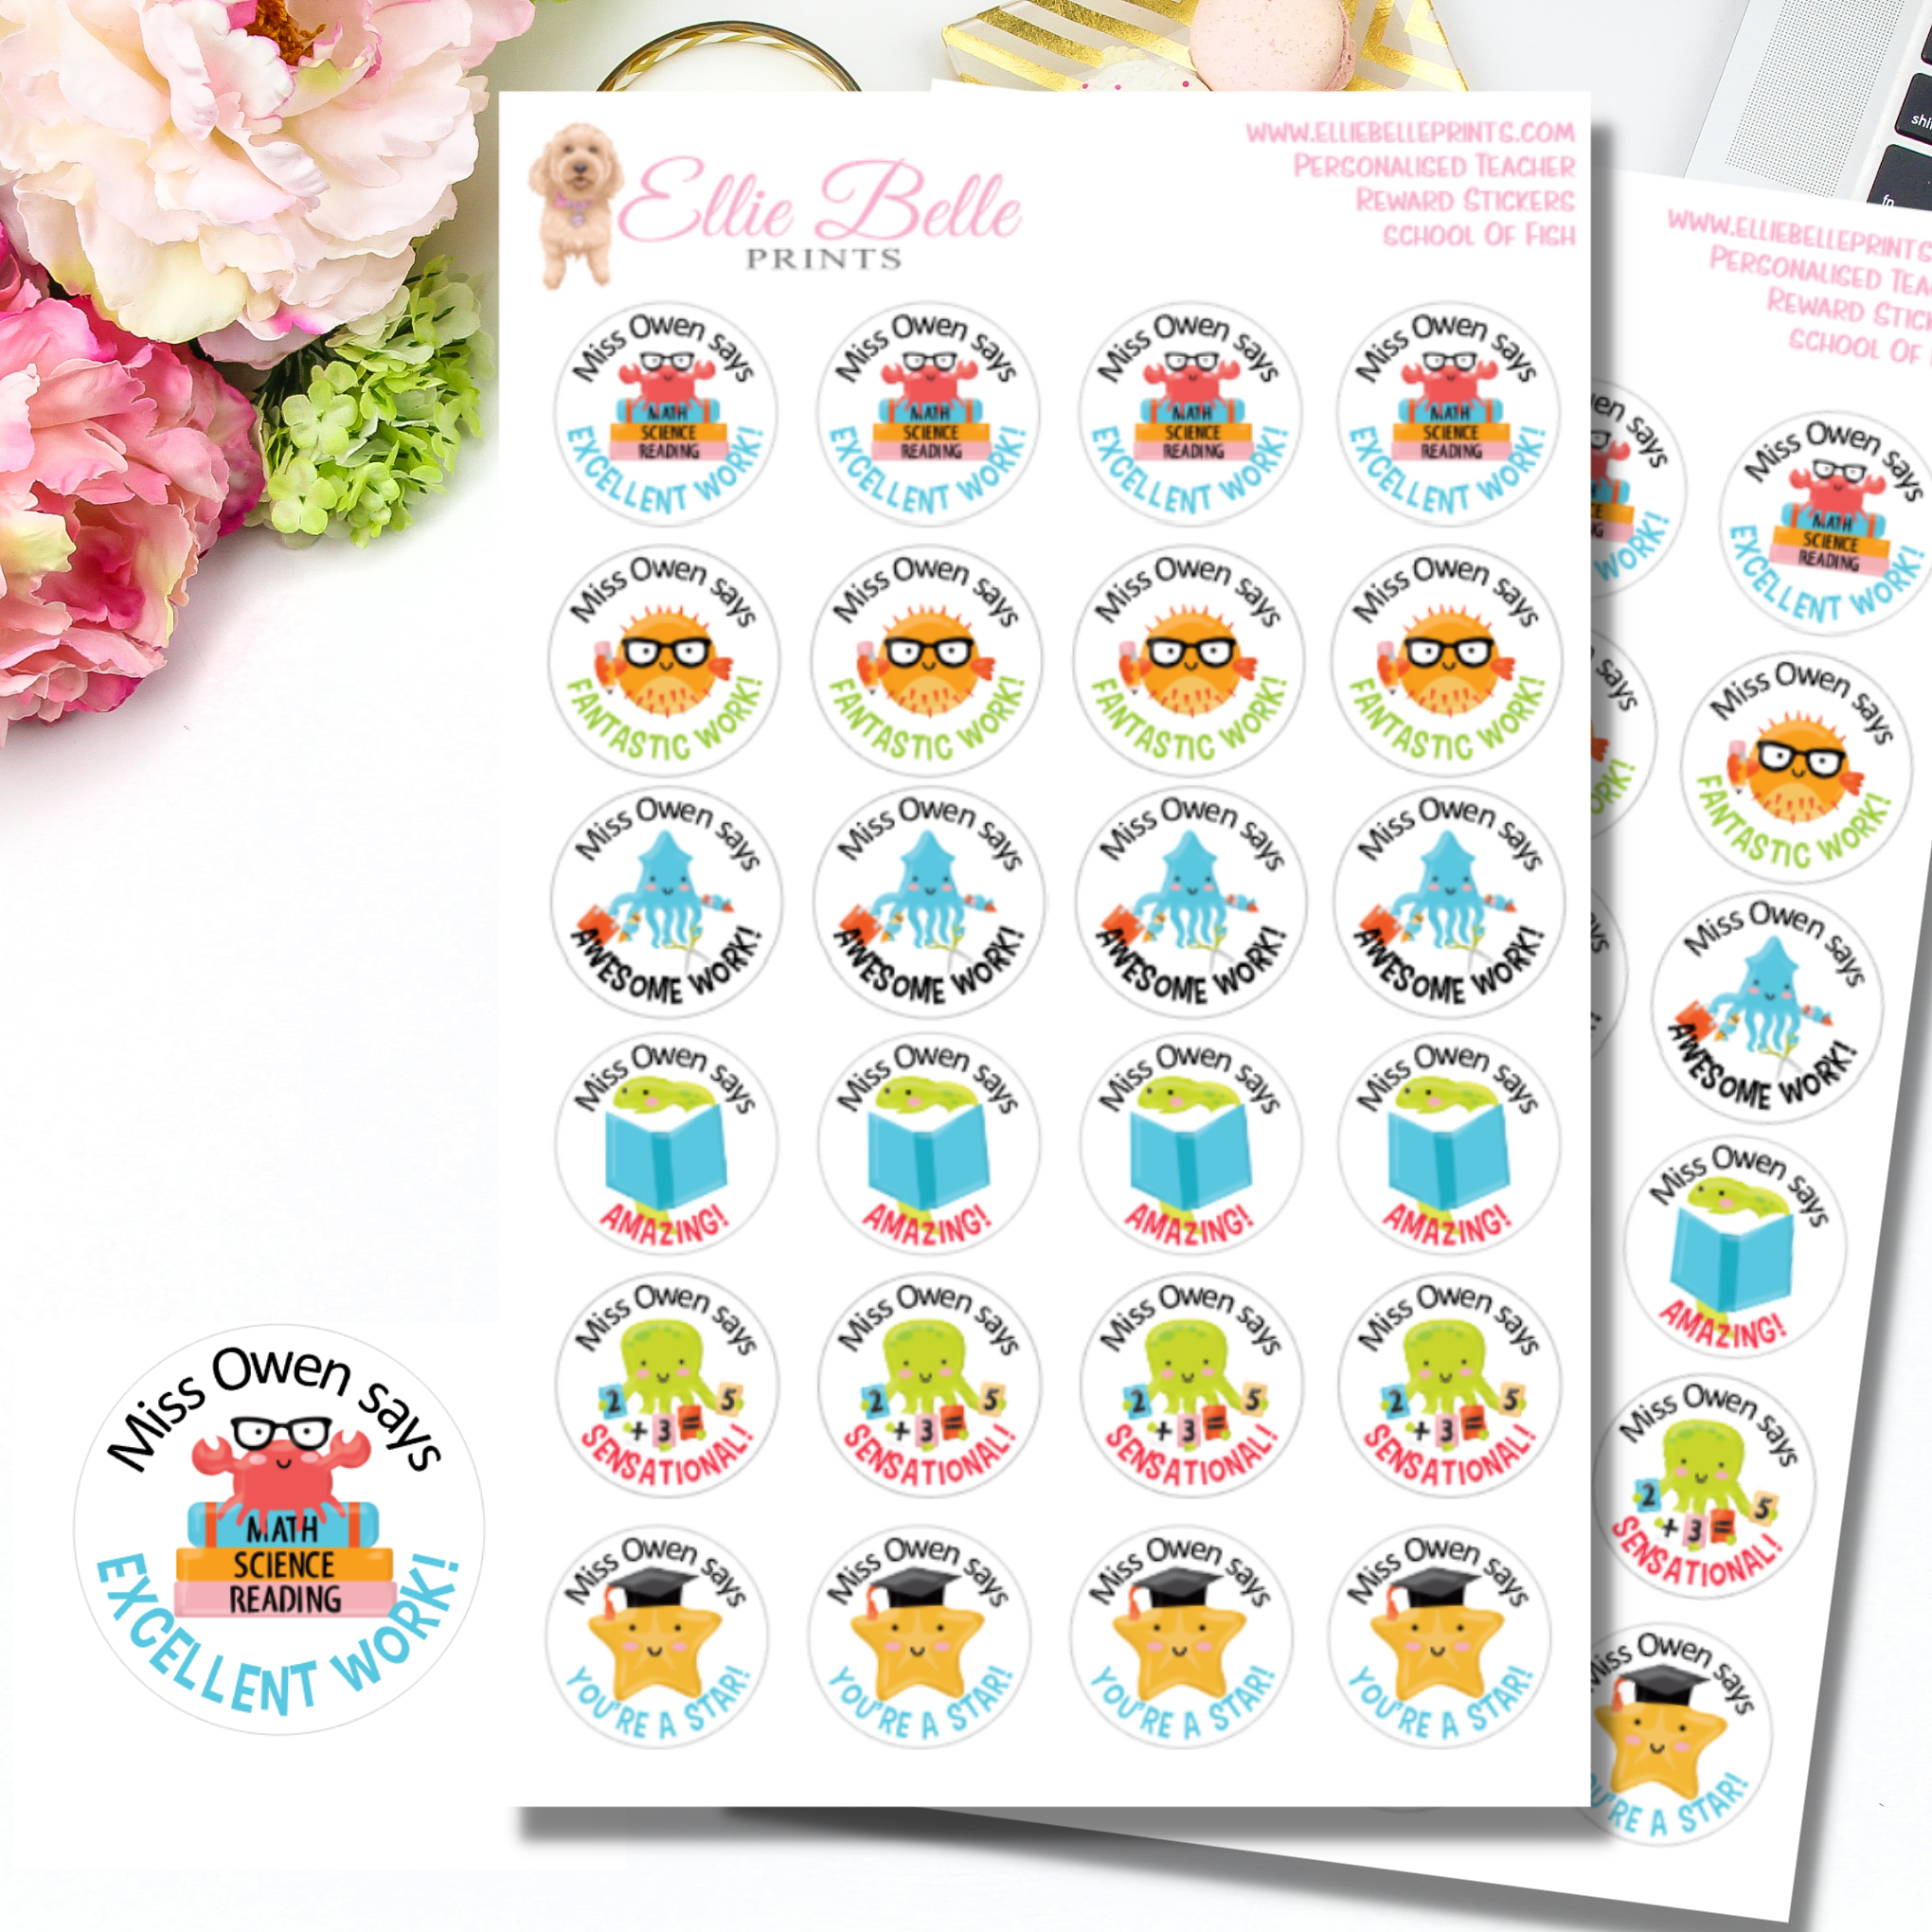 School Of Fish - Personalised Teacher Reward Stickers